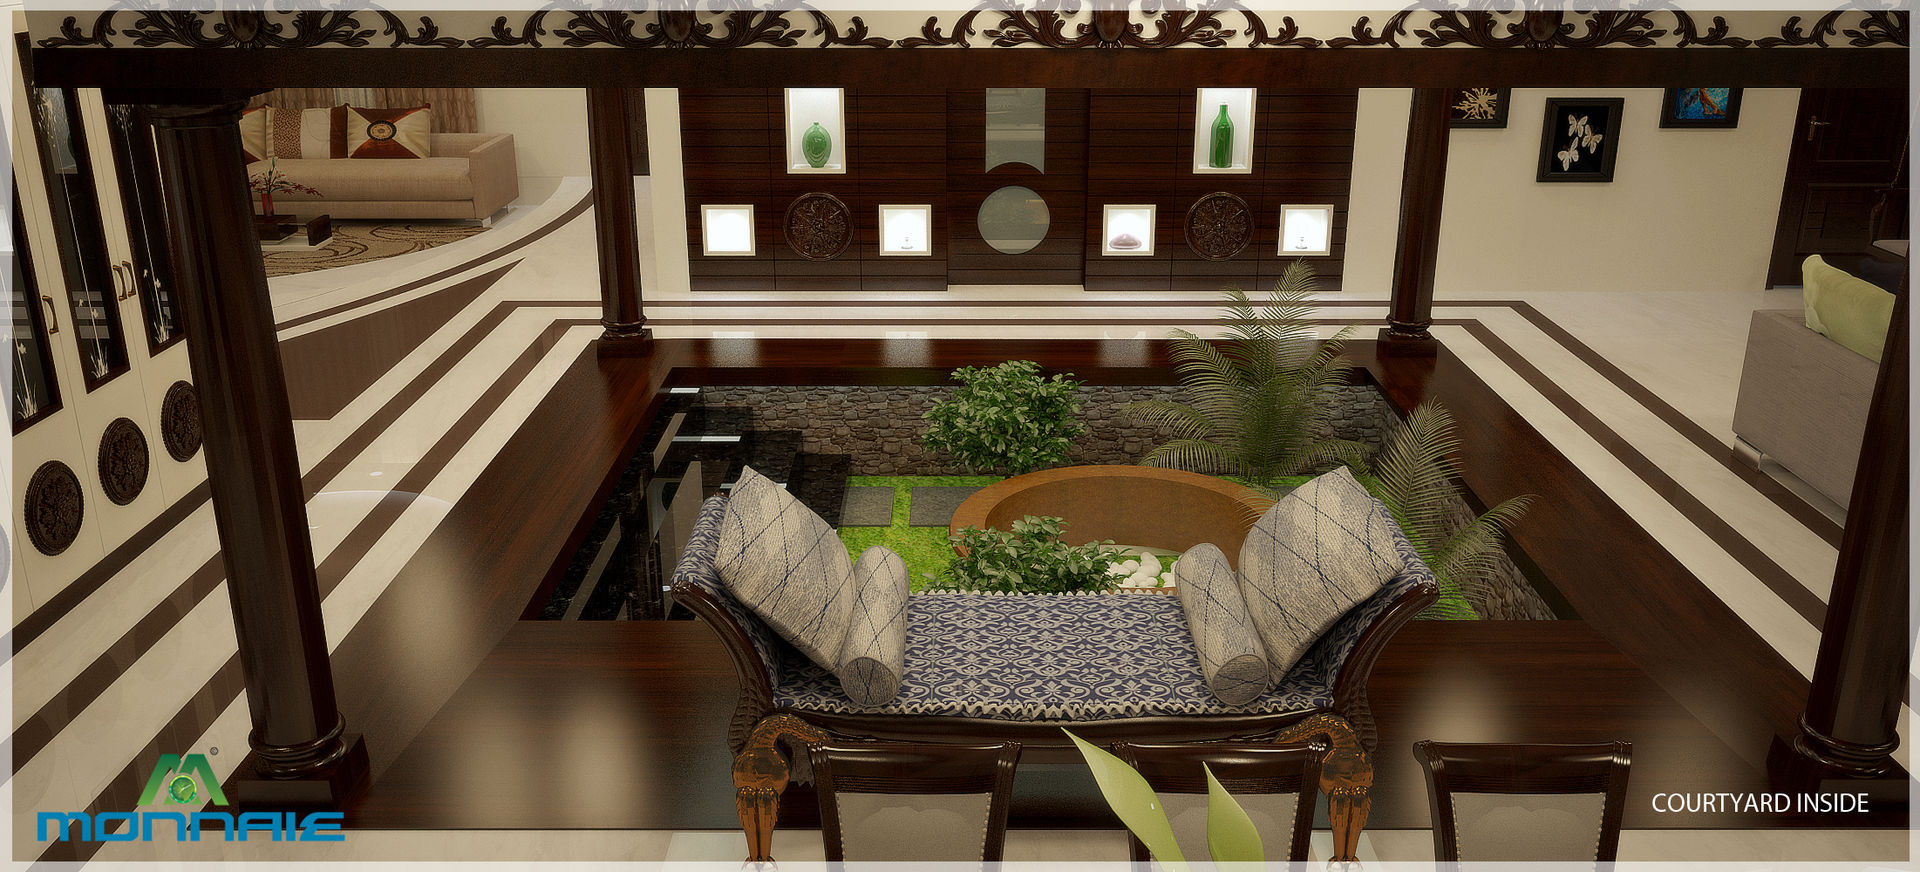 Magic in interiors with Indian contemporary design, Premdas Krishna Premdas Krishna Modern living room